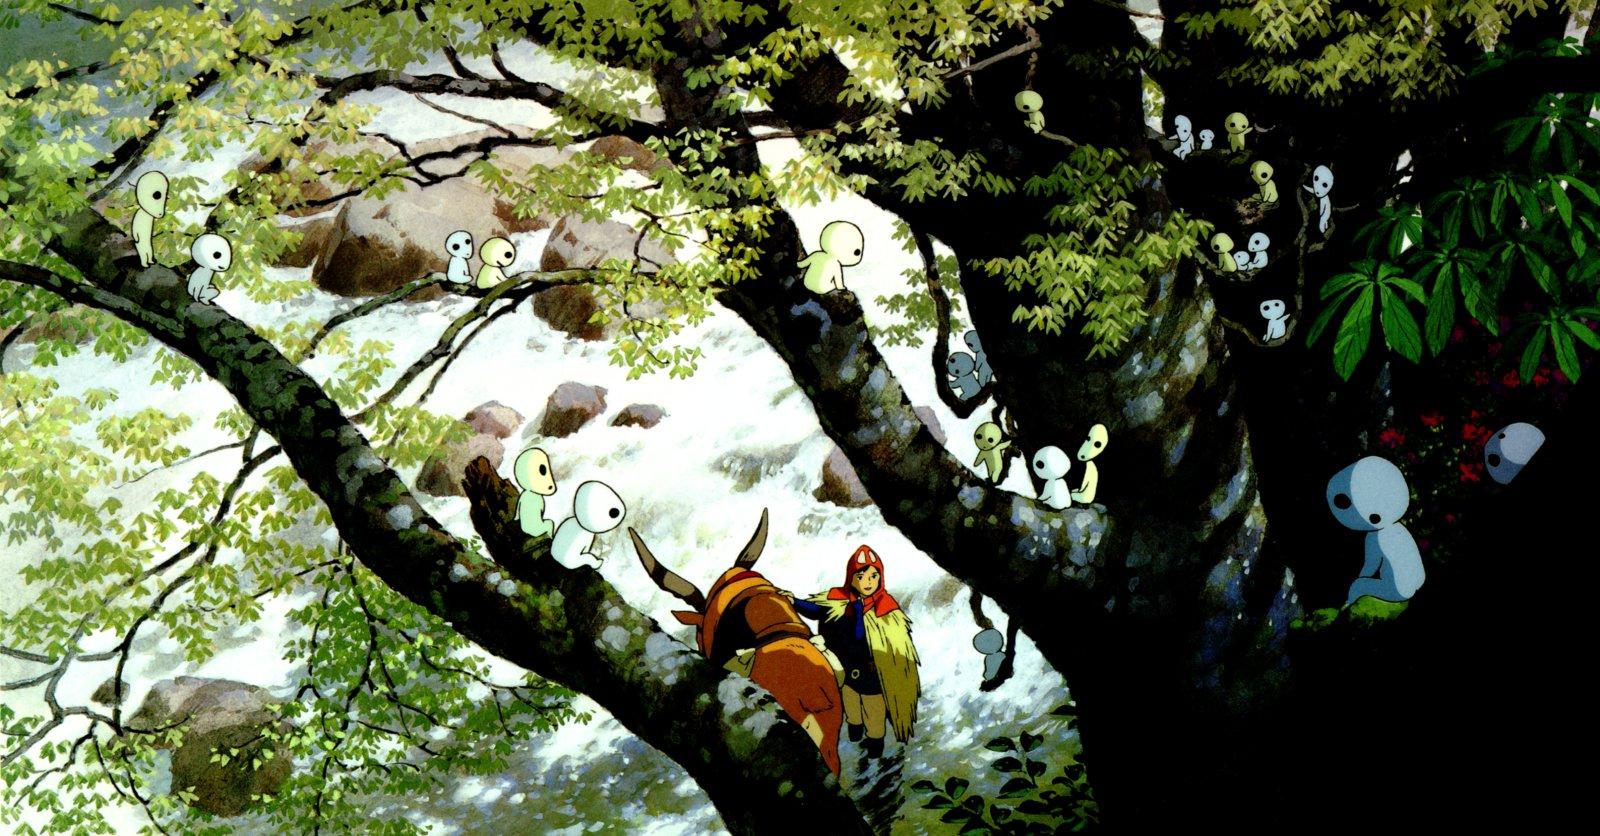 100+] Princess Mononoke Wallpapers | Wallpapers.com